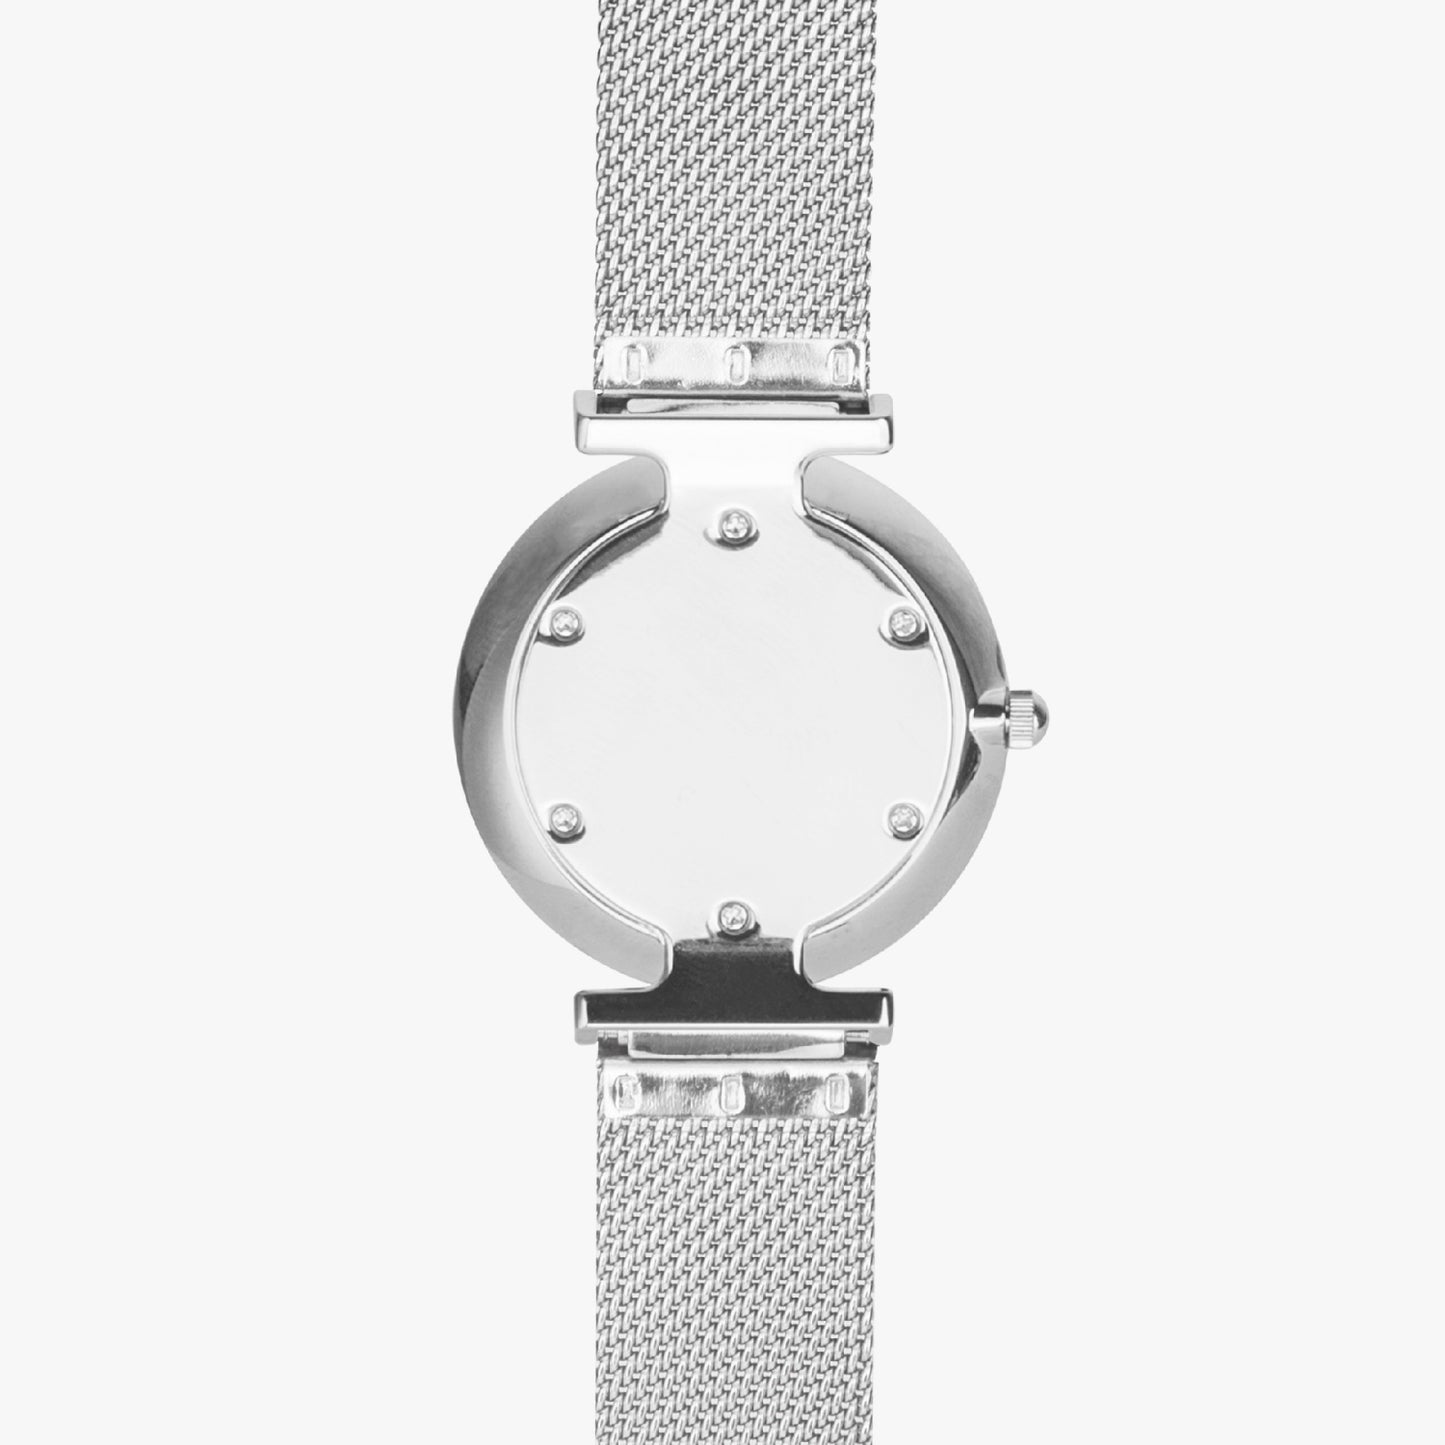 Ultra thin fashion quartz watch "Luciole" (with indicators)